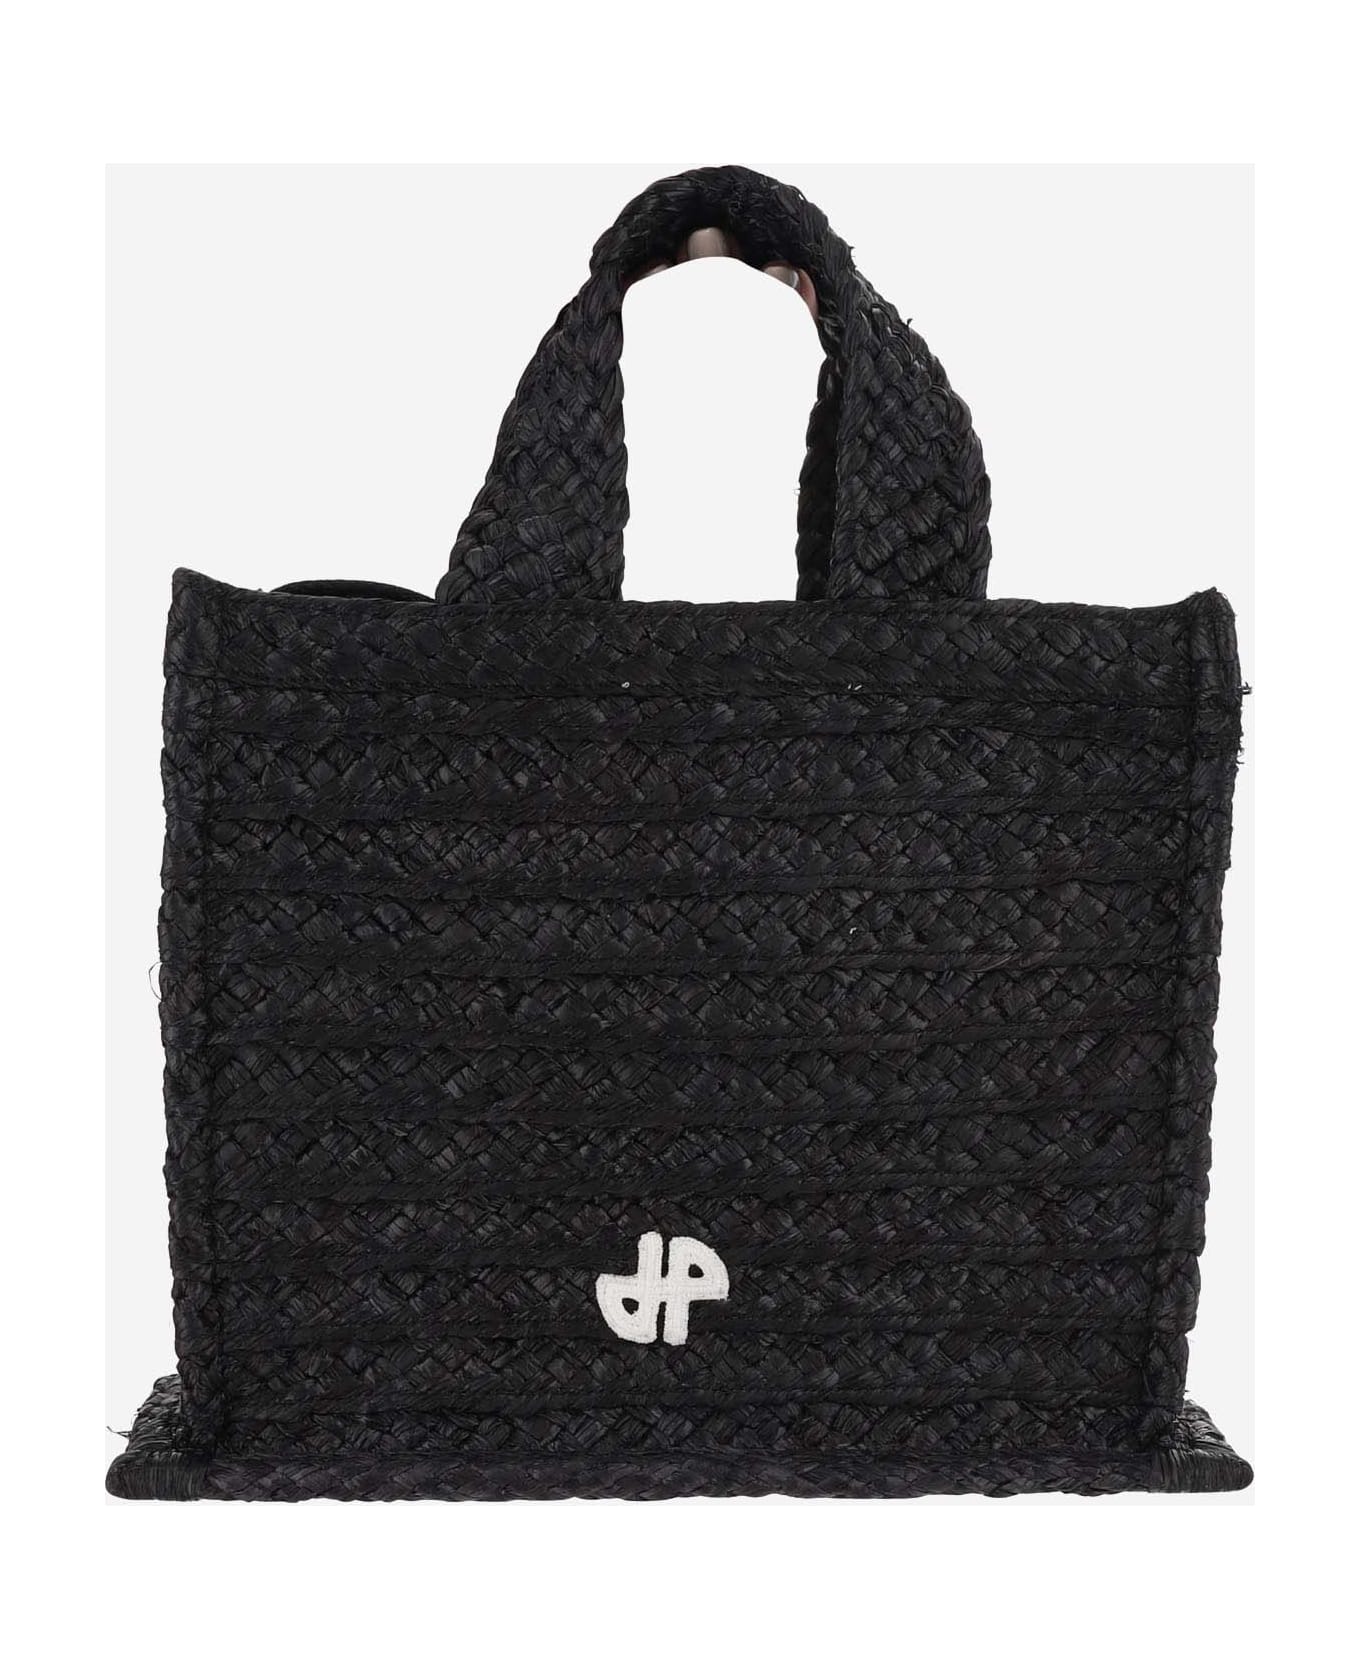 Patou Small Handbag "jp" - Black トートバッグ